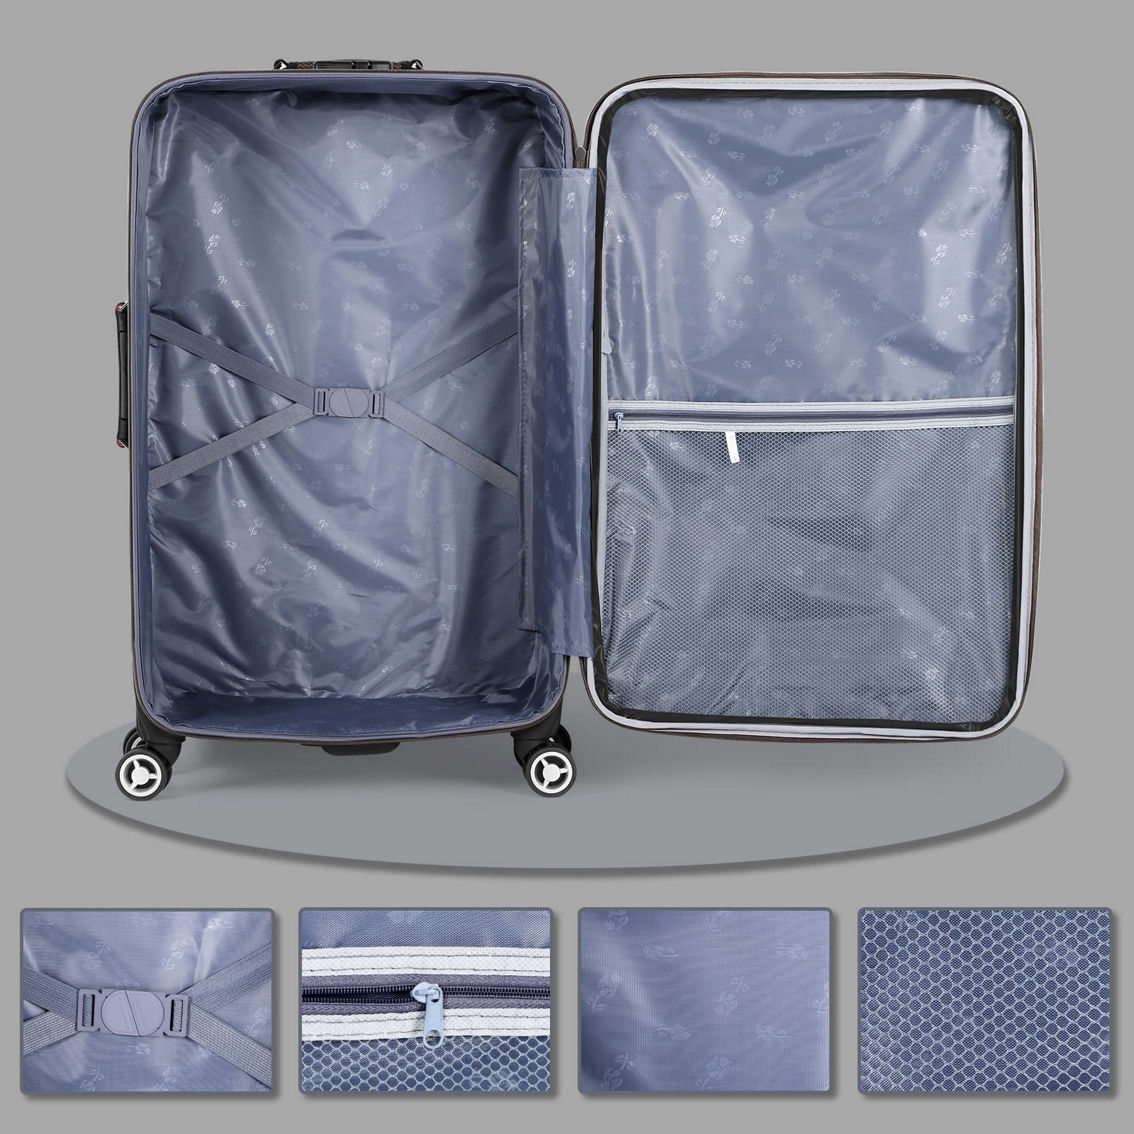 Hikolayae Collection Softside Spinner Luggage Sets in Elegant Black, 3 Piece - Image 5 of 5